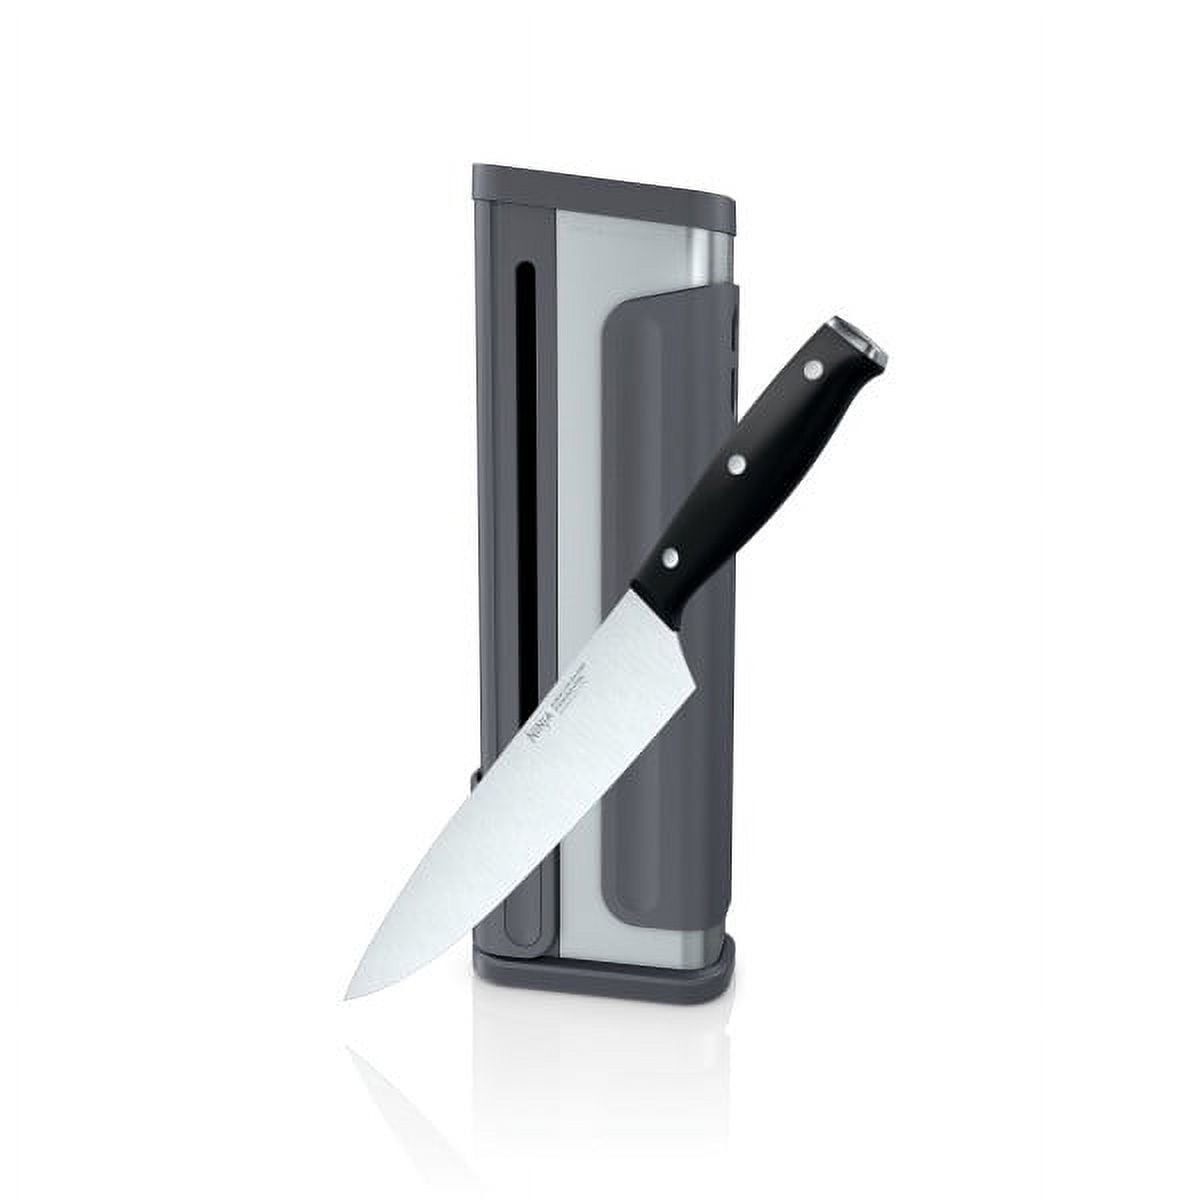 Ninja Foodi NeverDull Premium 8Pc Knife Block Set with Sharpener, Ninja  Multi-Cookers